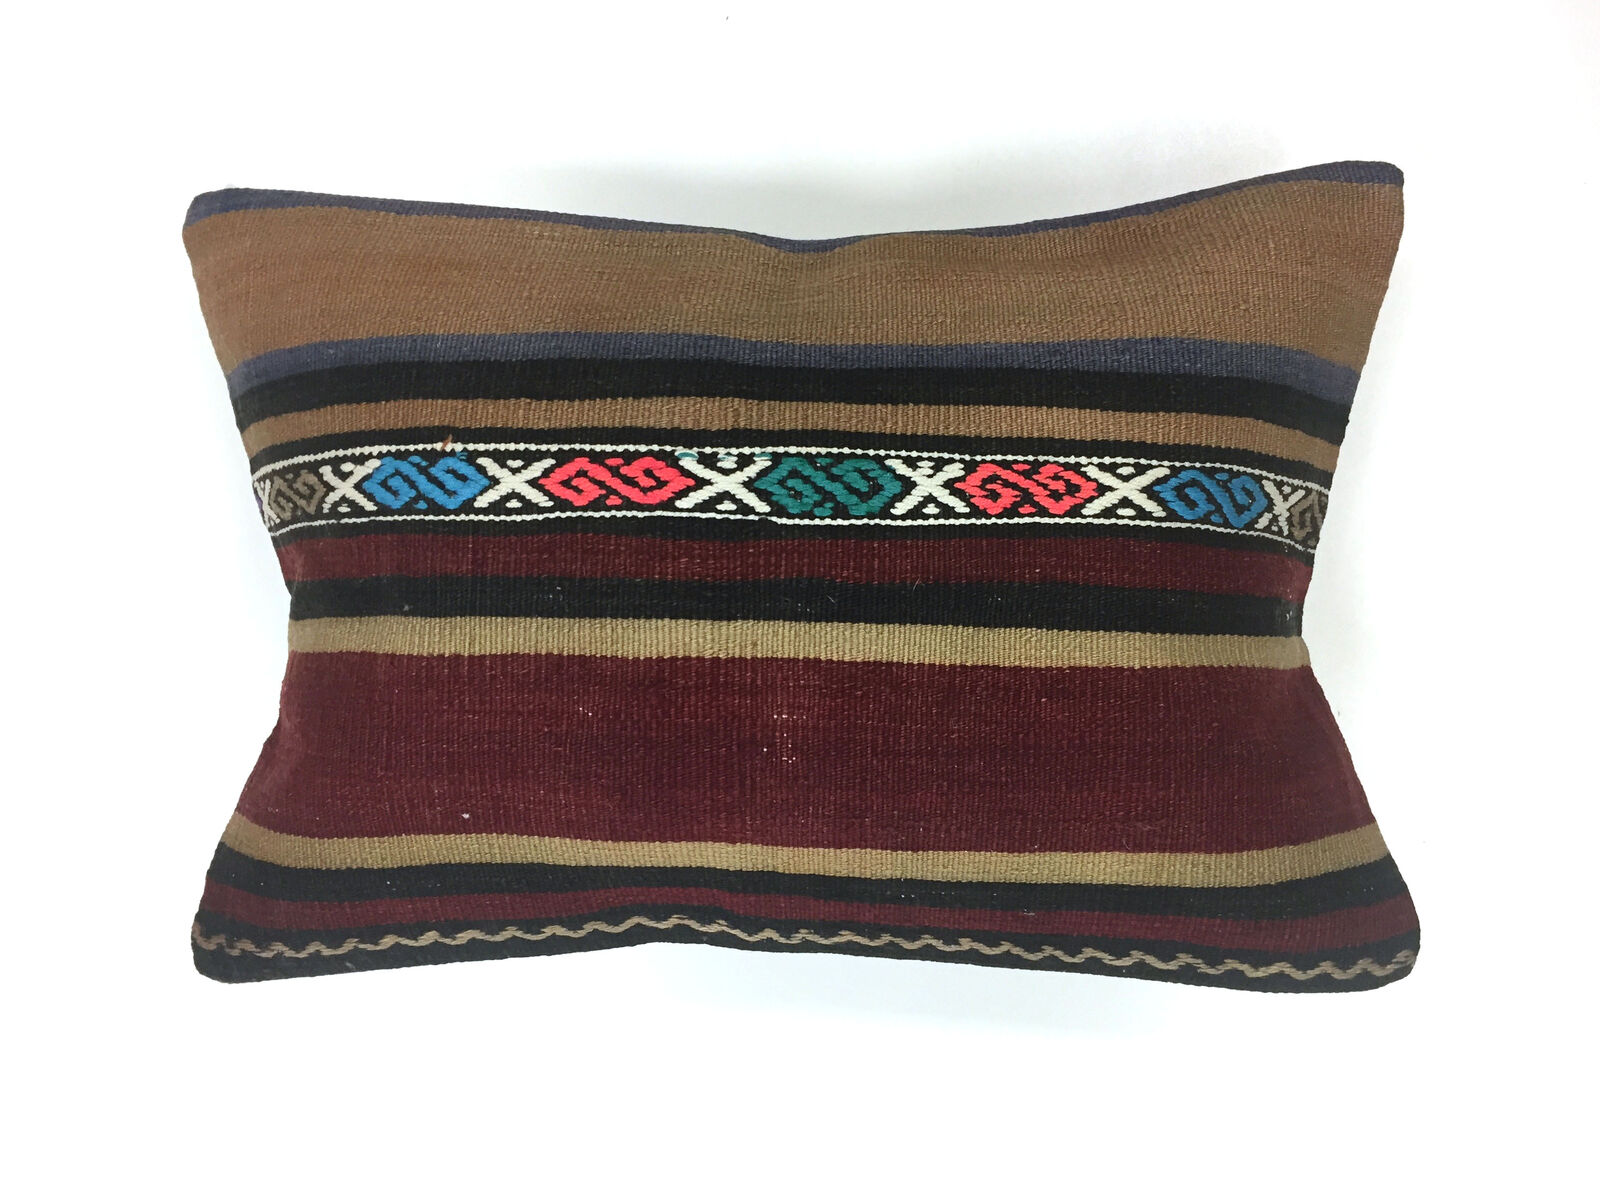 Vintage Turkish Kilim Cushion Cover Kelim Pillow 60x40 cm Moroccan style Home, Furniture & DIY:Home Decor:Cushions kilimshop.myshopify.com